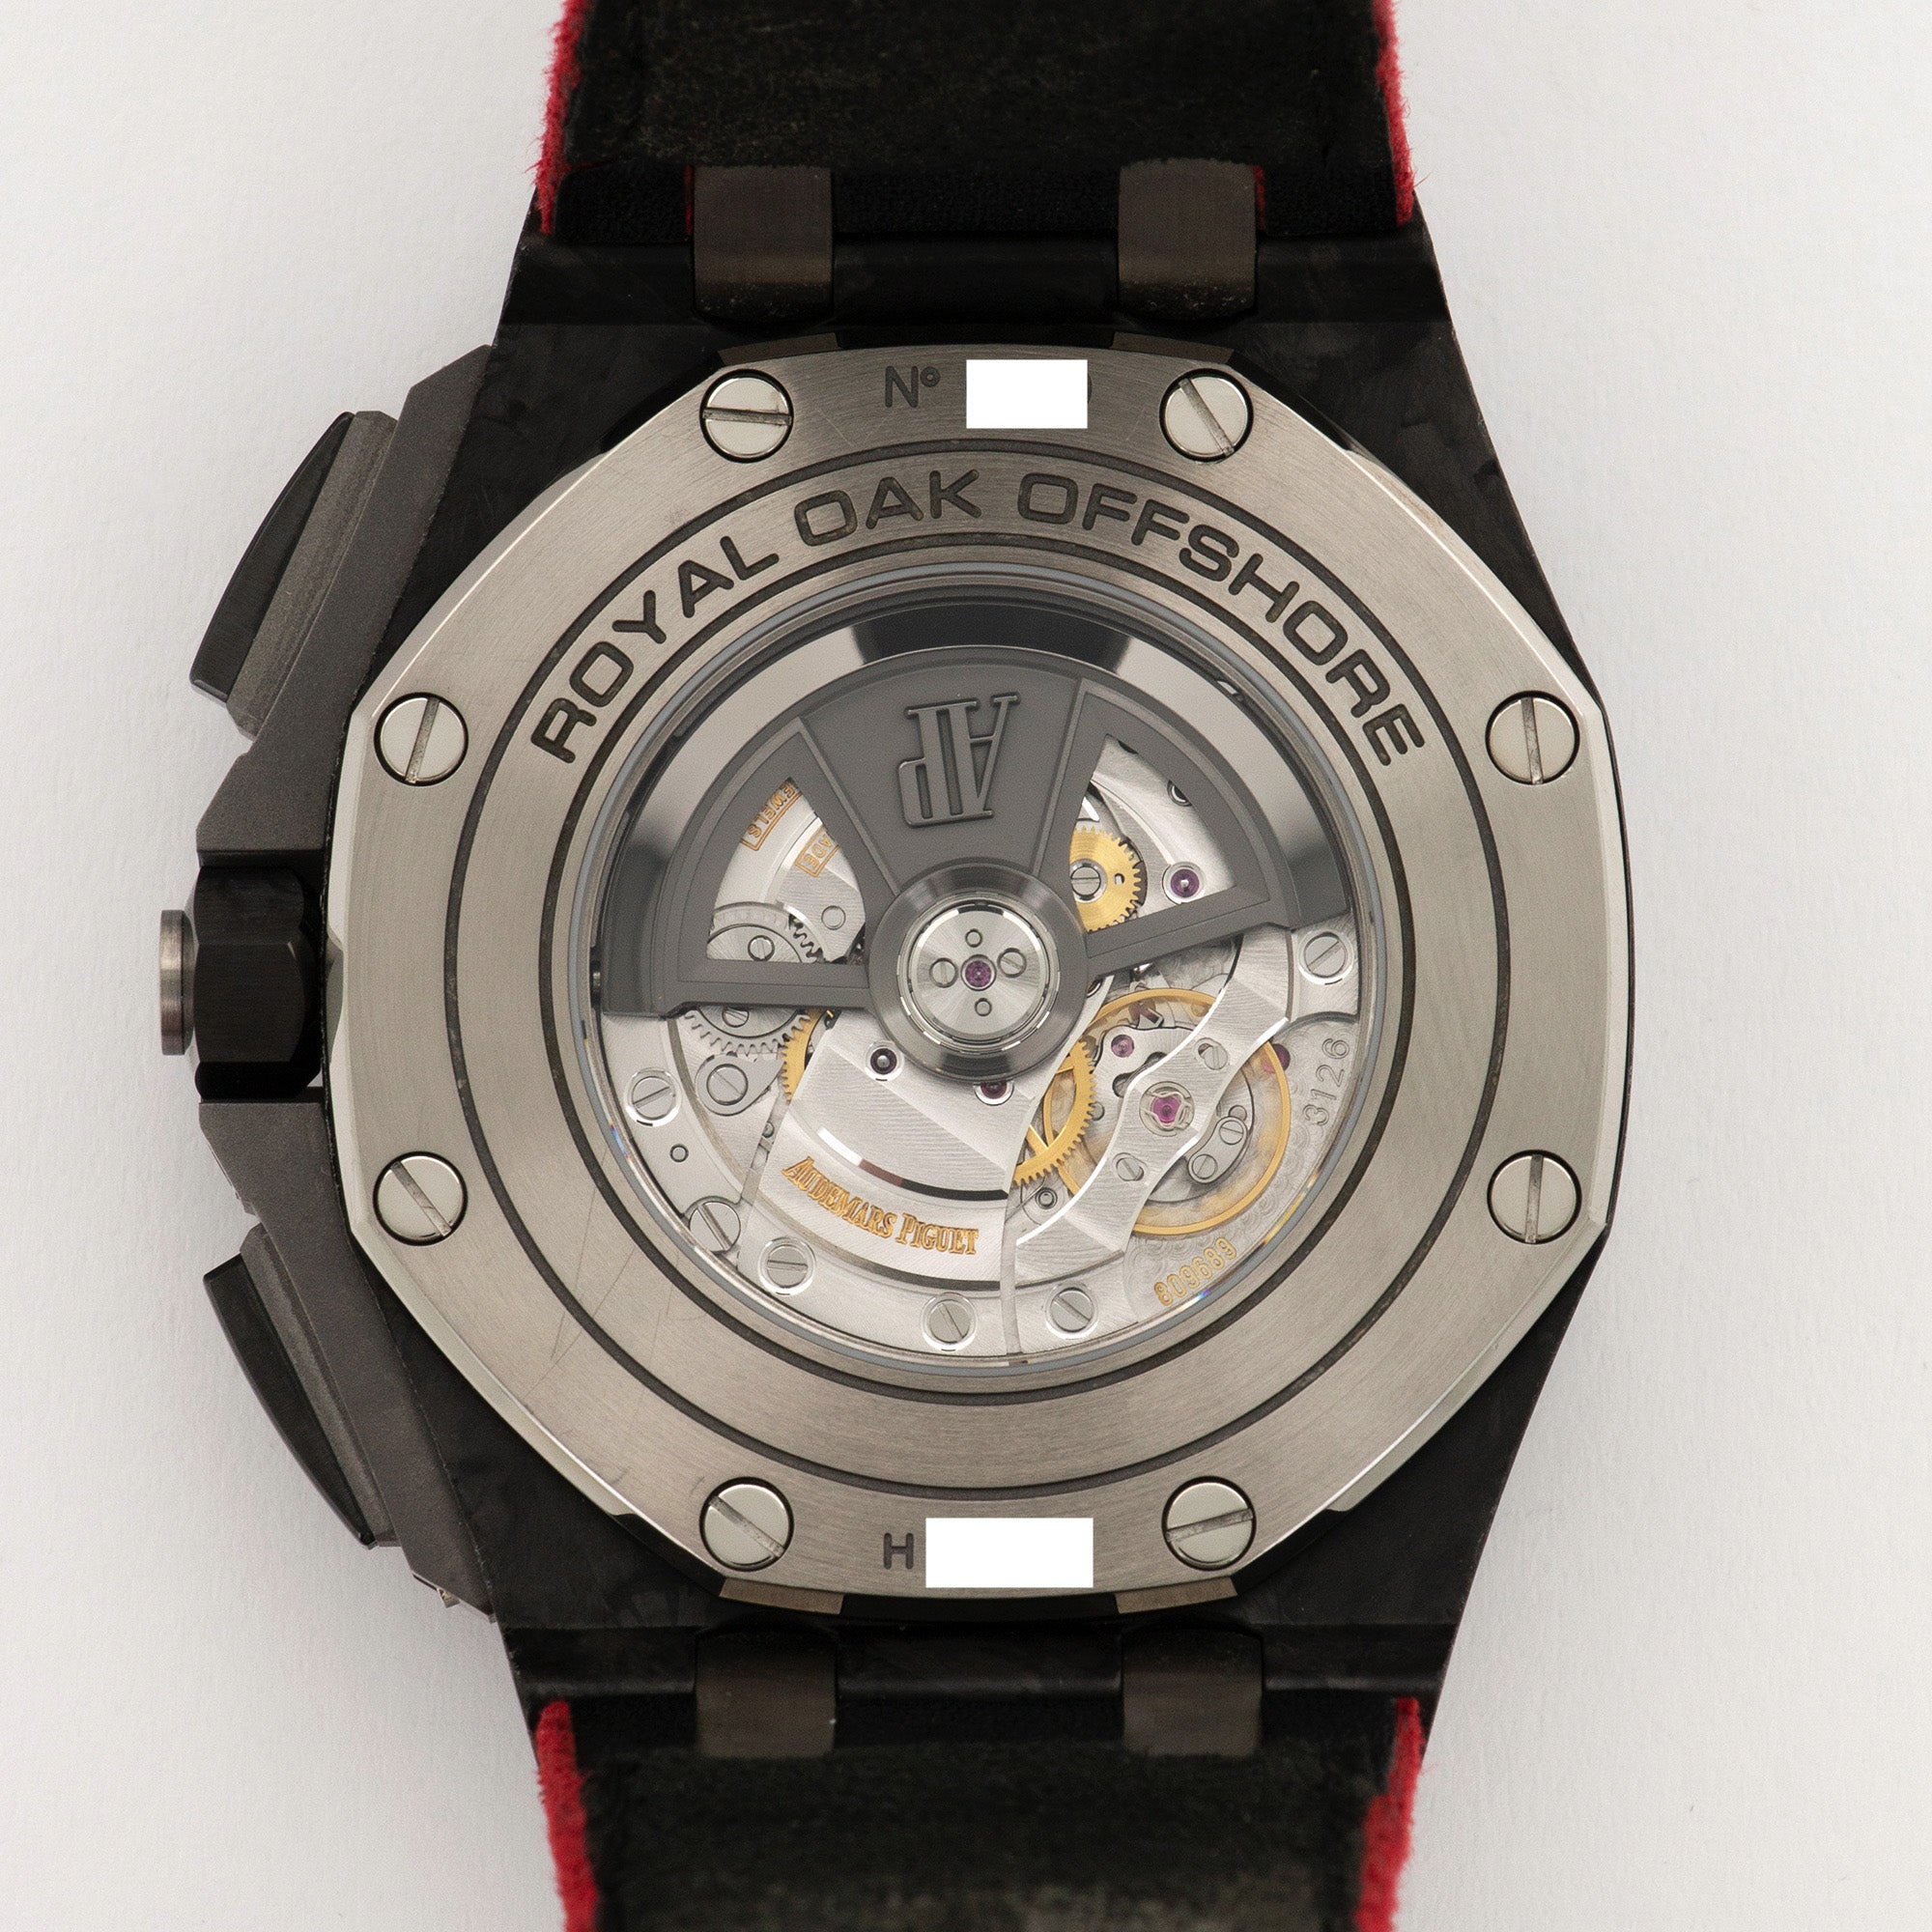 Audemars Piguet - Audemars Piguet Royal Oak Forged Carbon Offshore Watch Ref. 26400 - The Keystone Watches